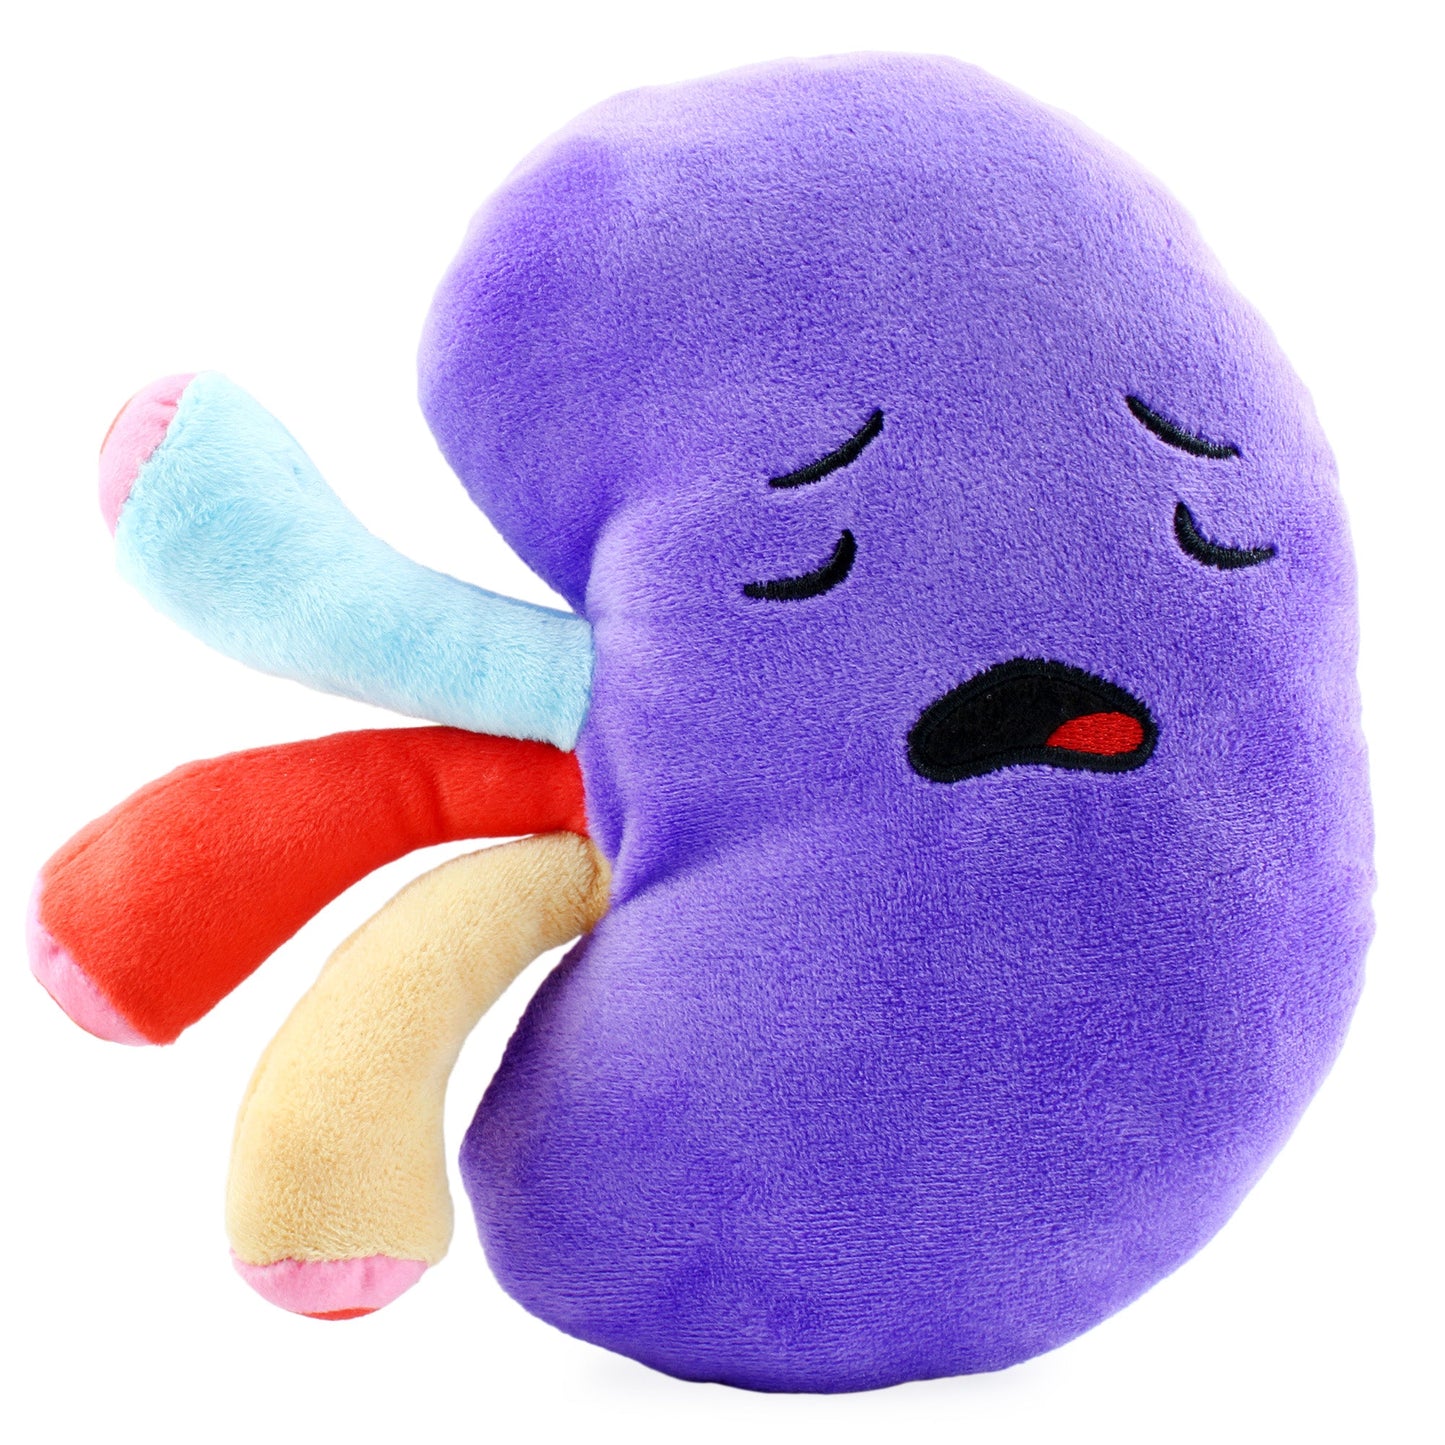 Plush Kidney, Stuffed Body Organ Toy